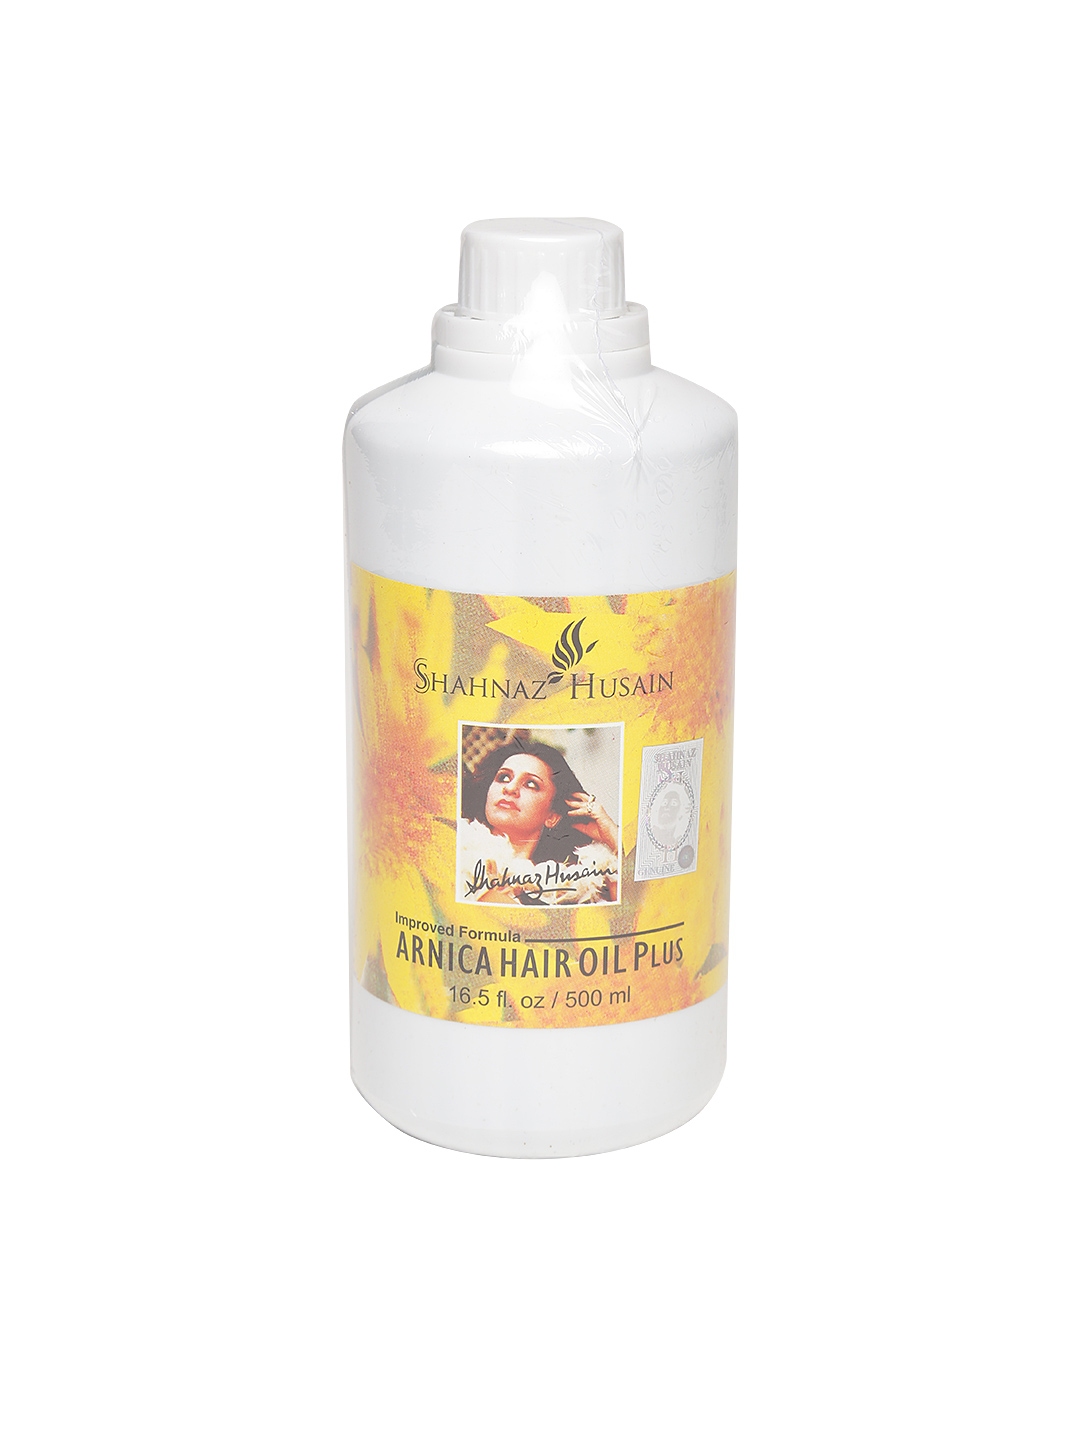 Buy Shahnaz Husain Shalocks Plus Ayurvedic Hair Oil 200ml 67floz Nourishes  The Hair Online at Lowest Price in Ubuy India 185256014920